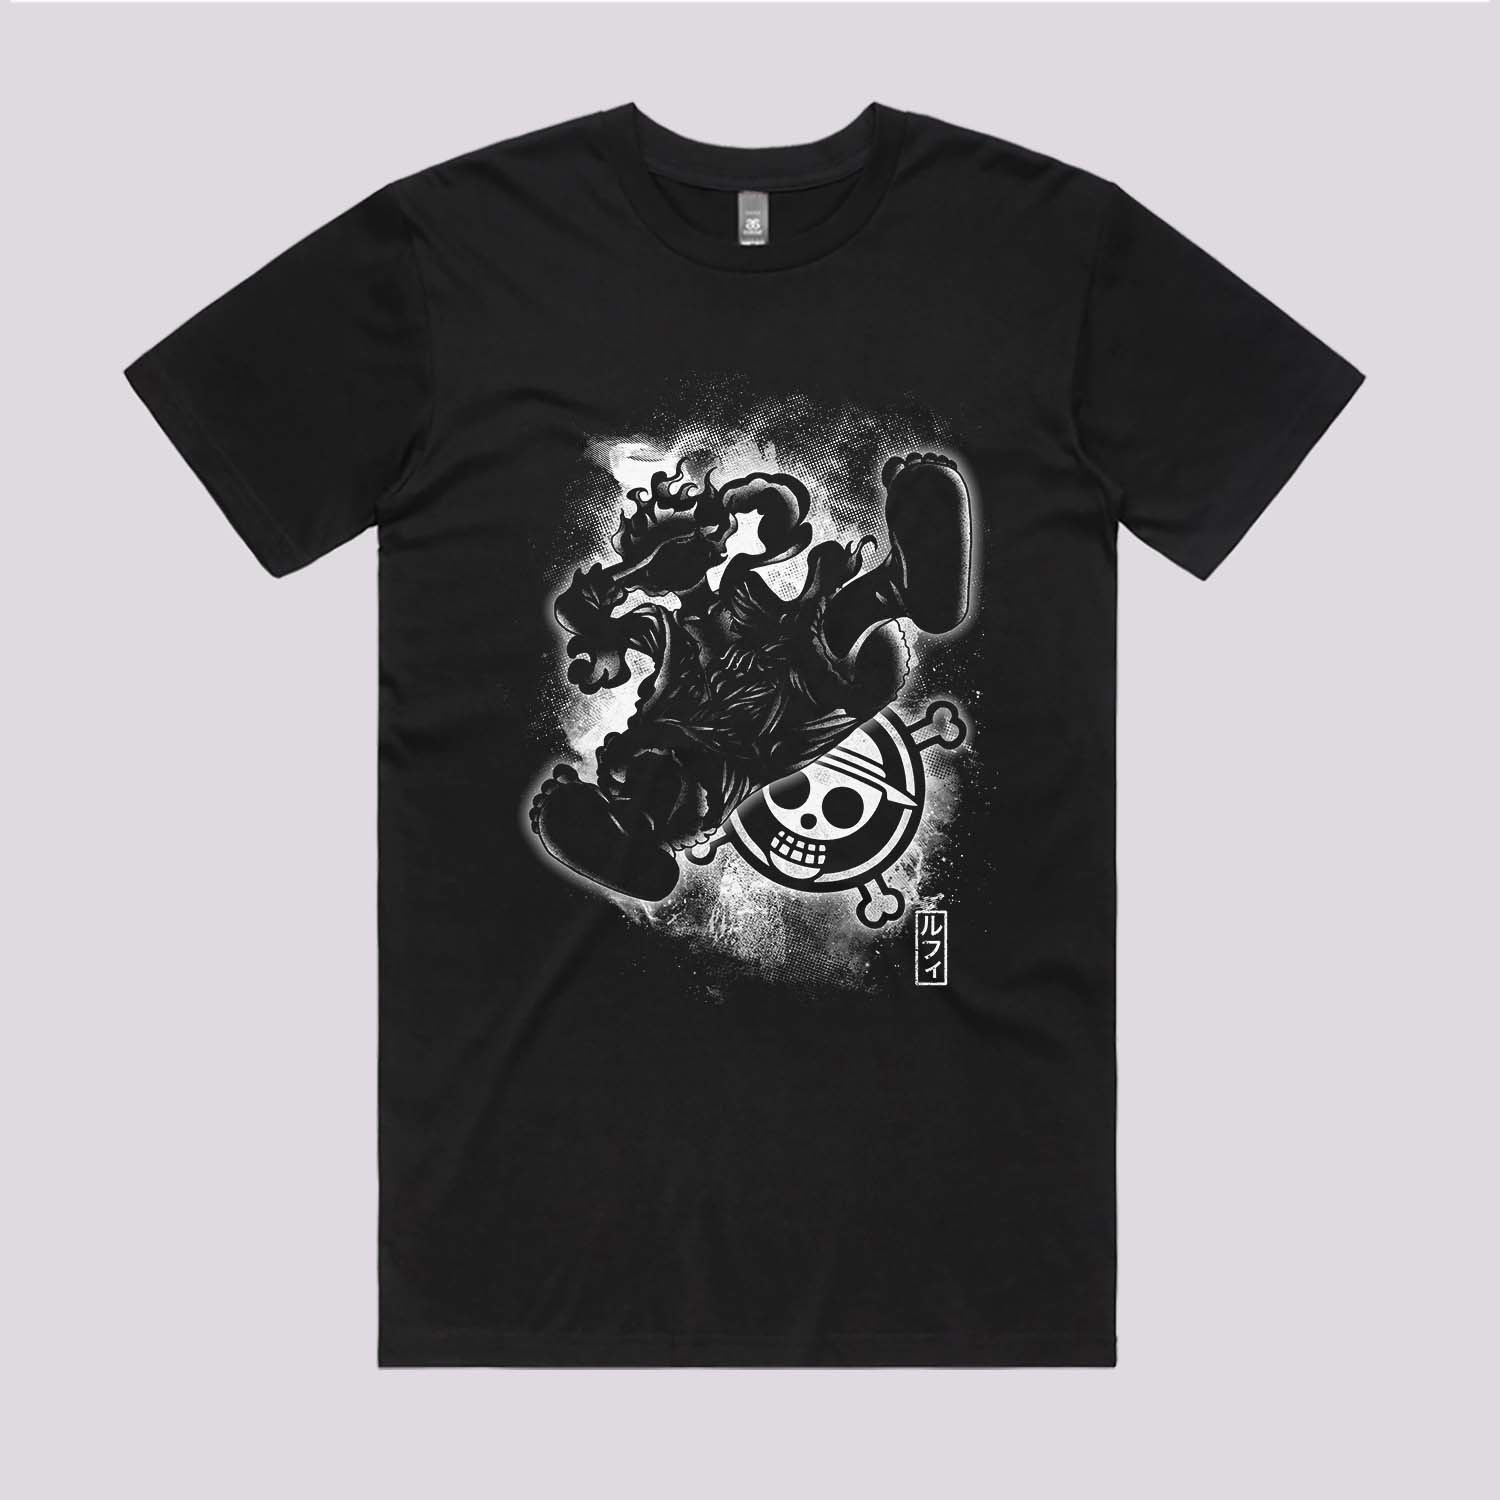 Cosmic Gear 5 T-Shirt